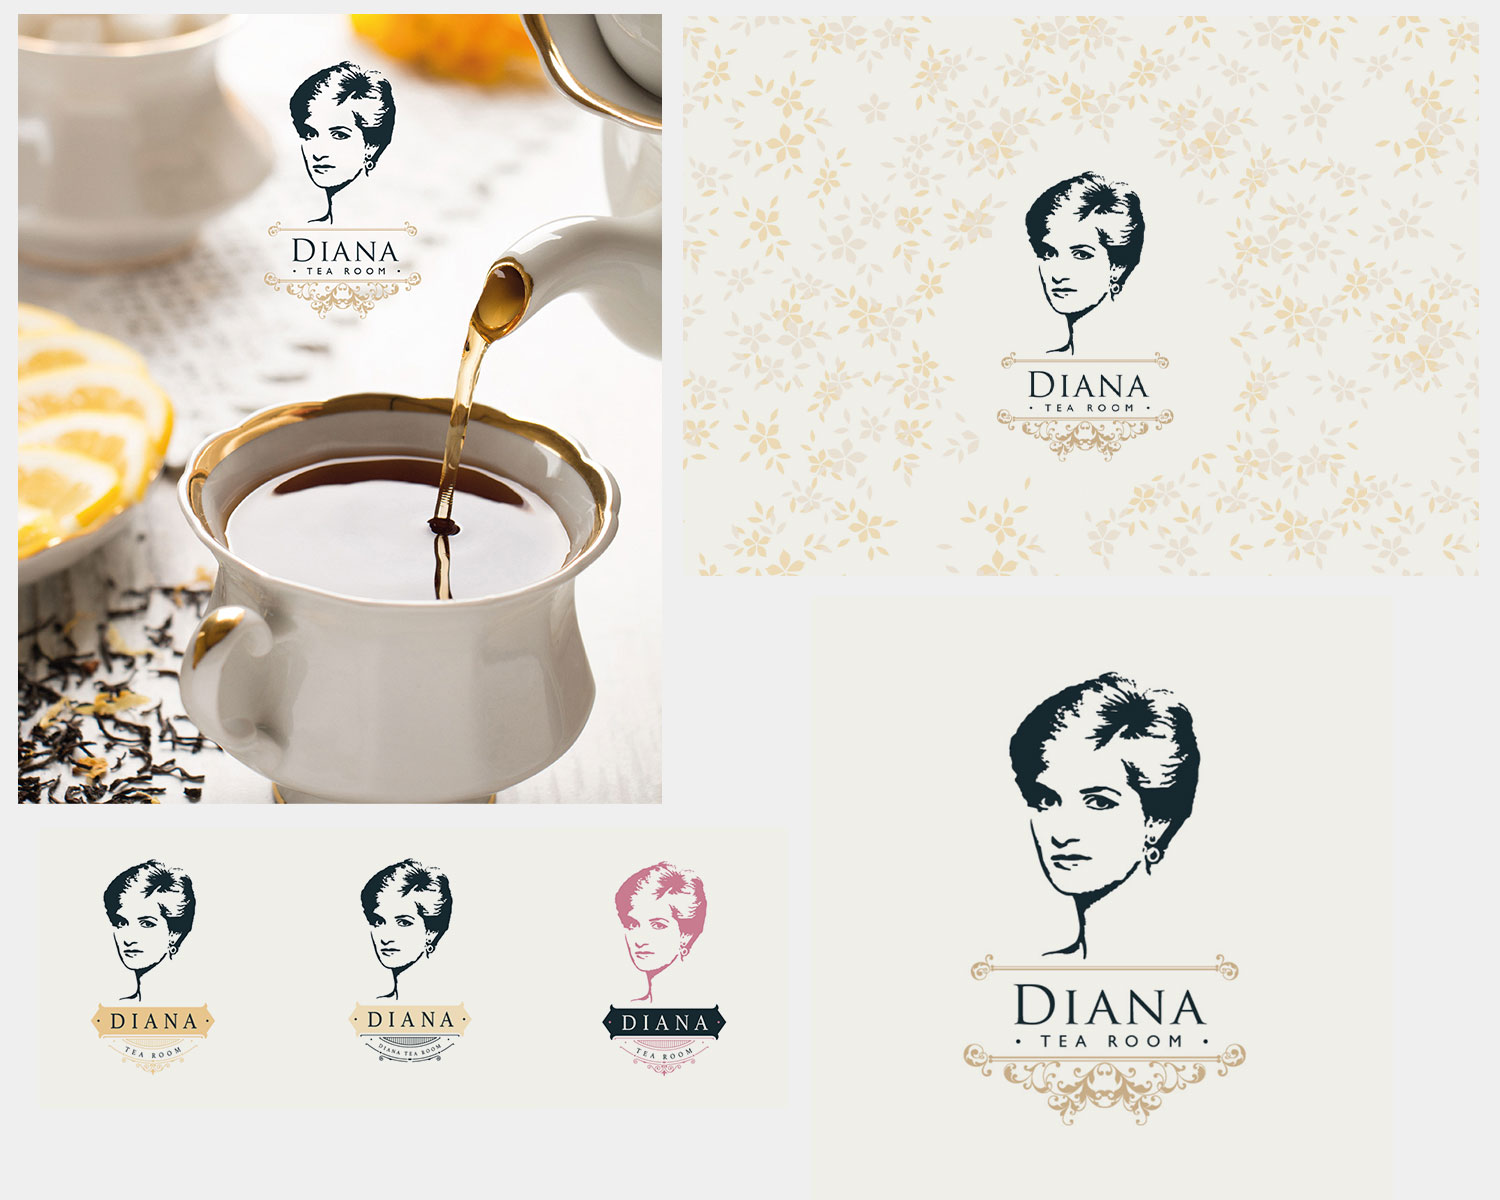 Diana Tea Room